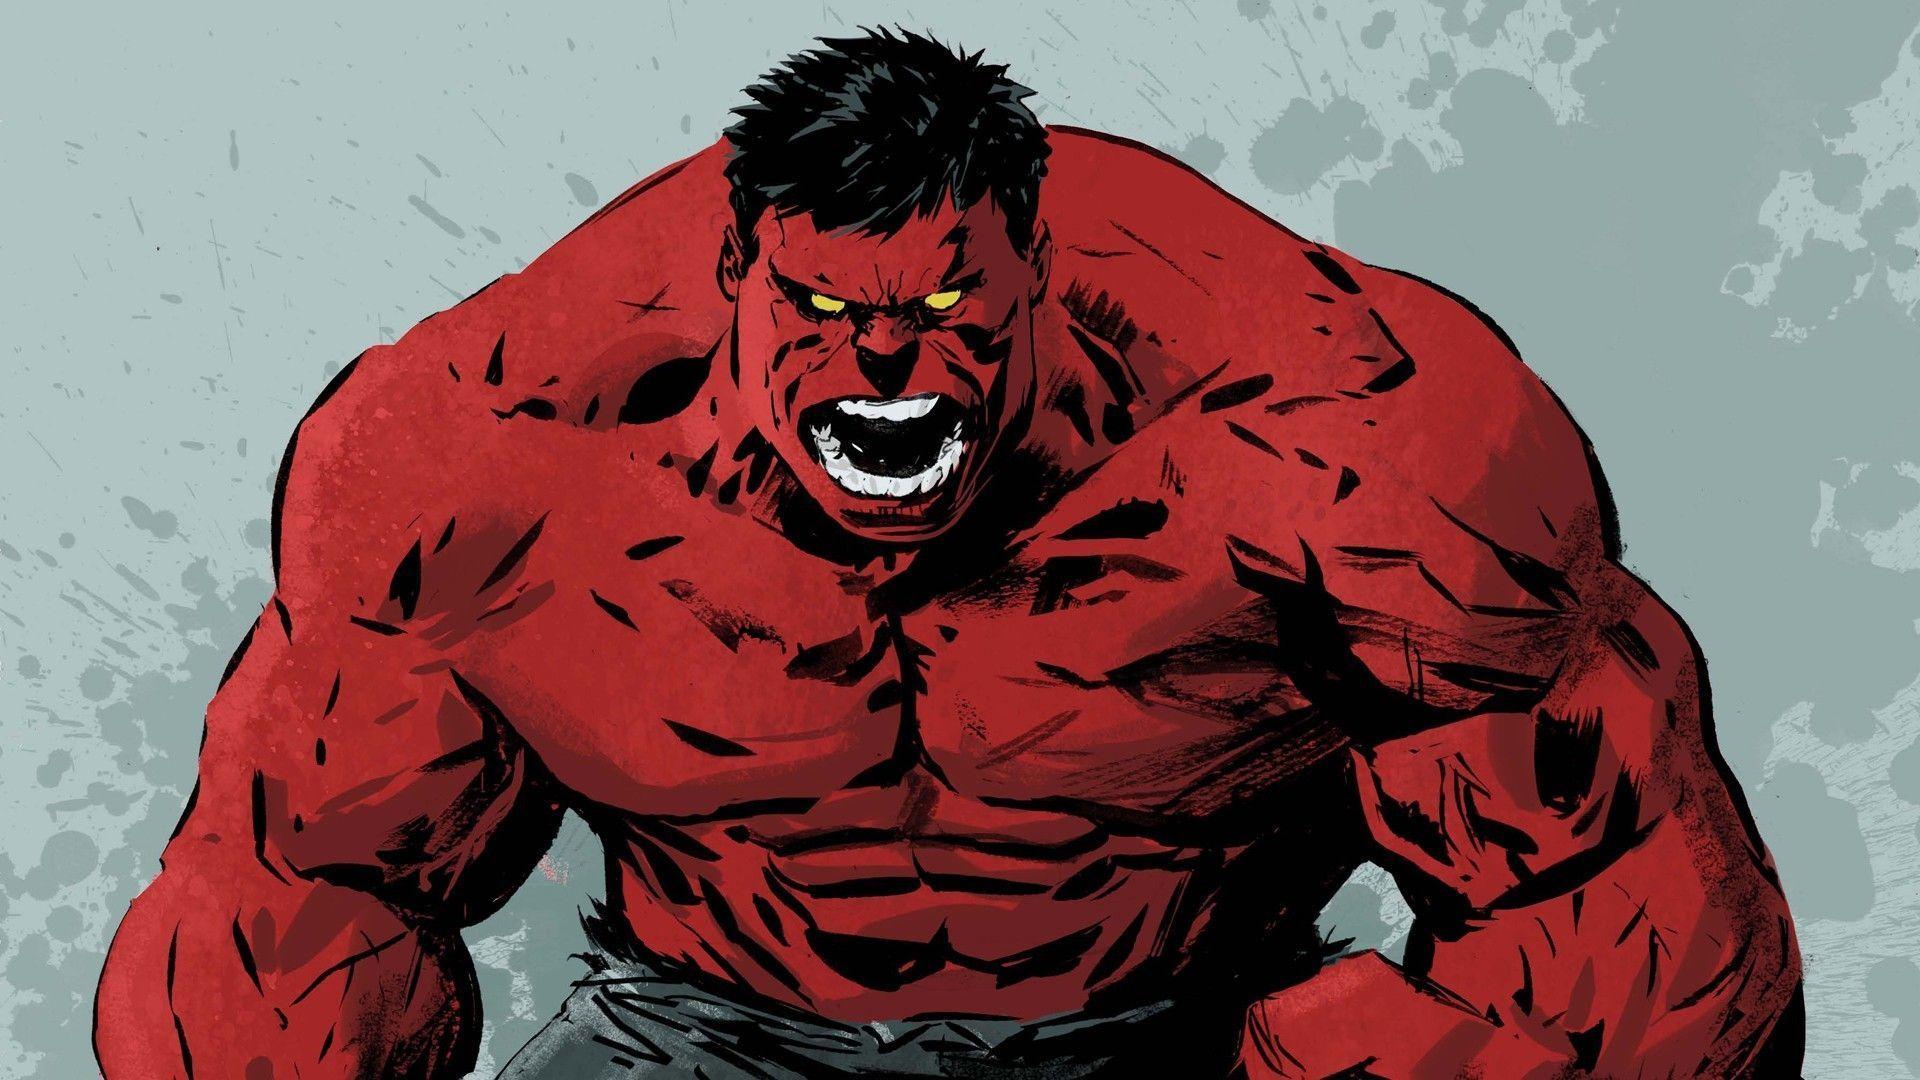 The Red Hulk Wallpaper